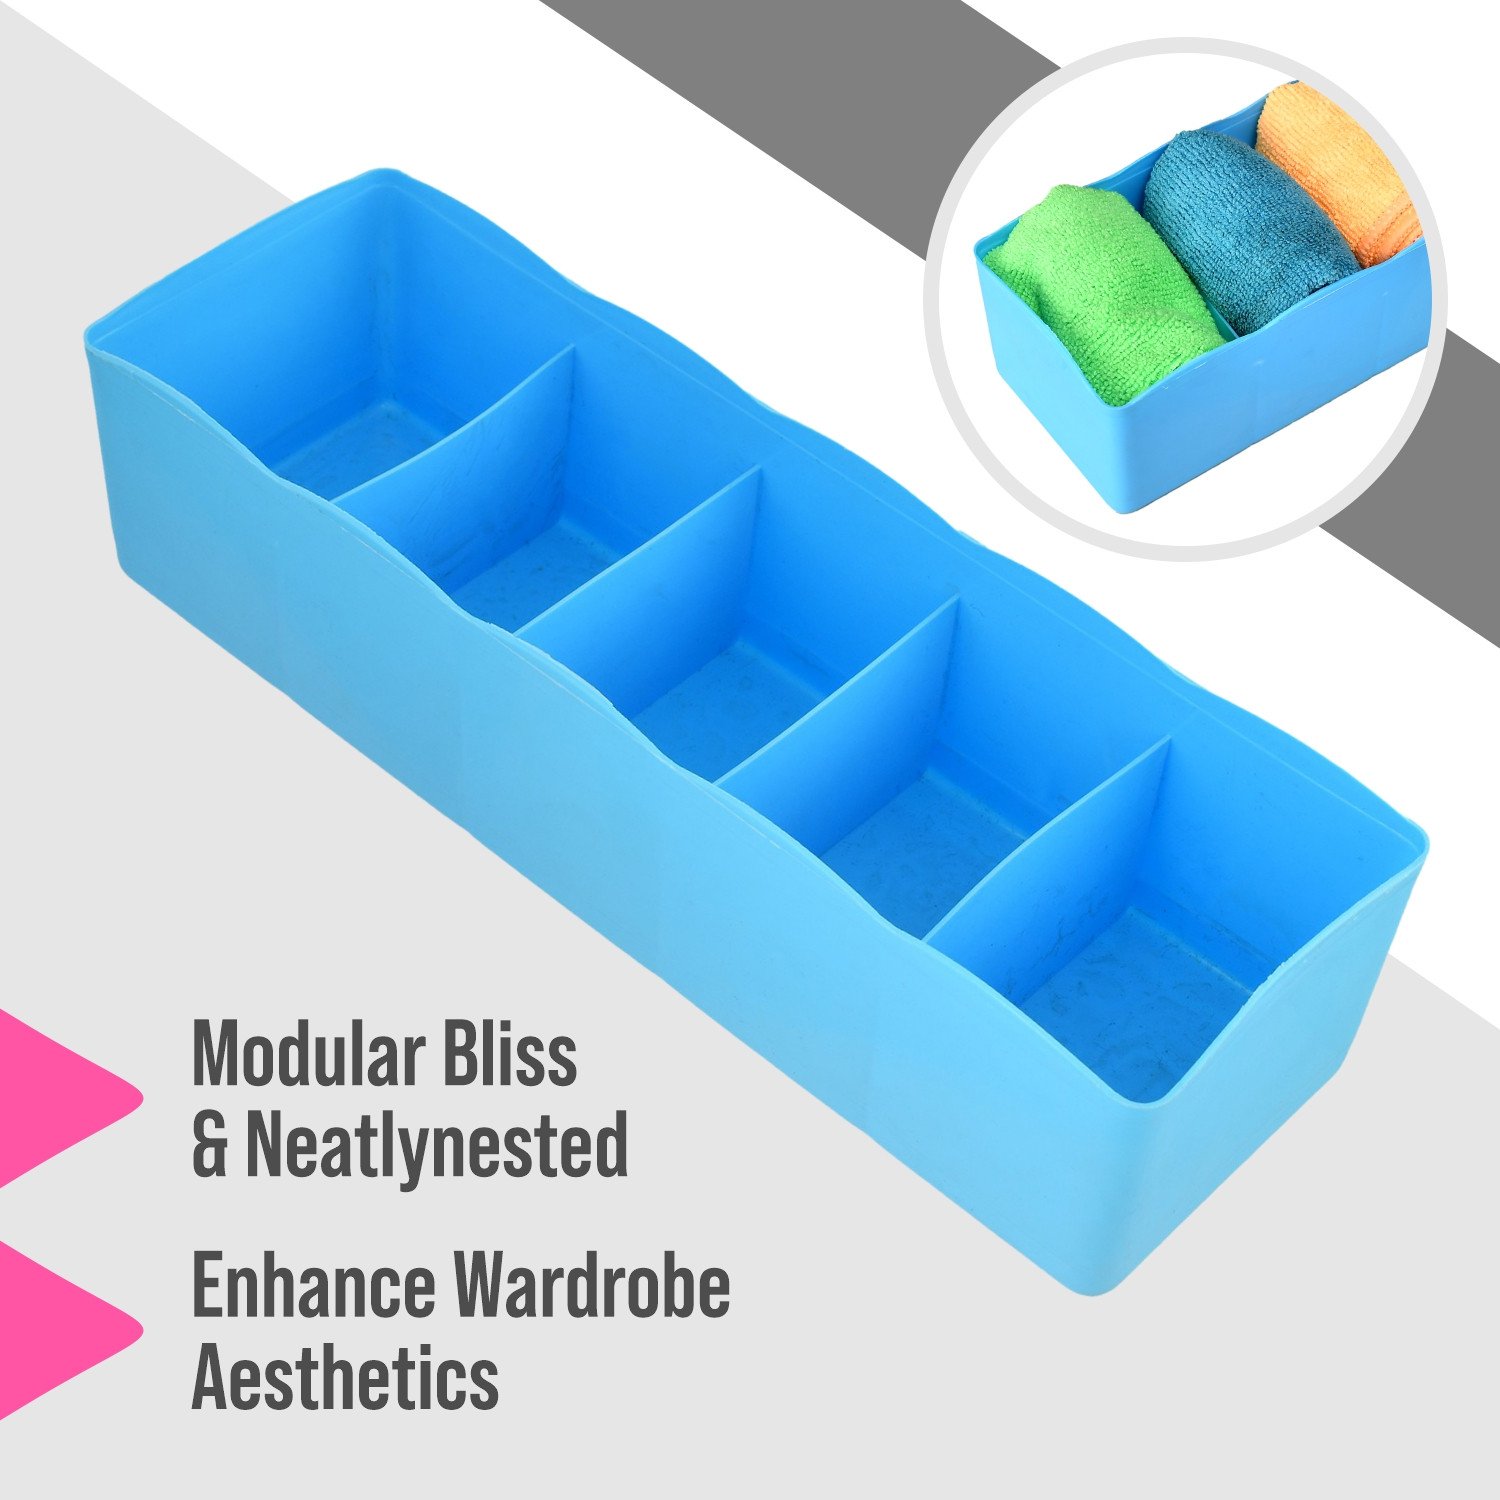 Kuber Industries Drawer Organizer | Plastic Undergarment Organizer for Socks-Ties | Stackable Drawer Divider Box | Closet Storage Box | 5 Grid Stationery Organizer|Blue